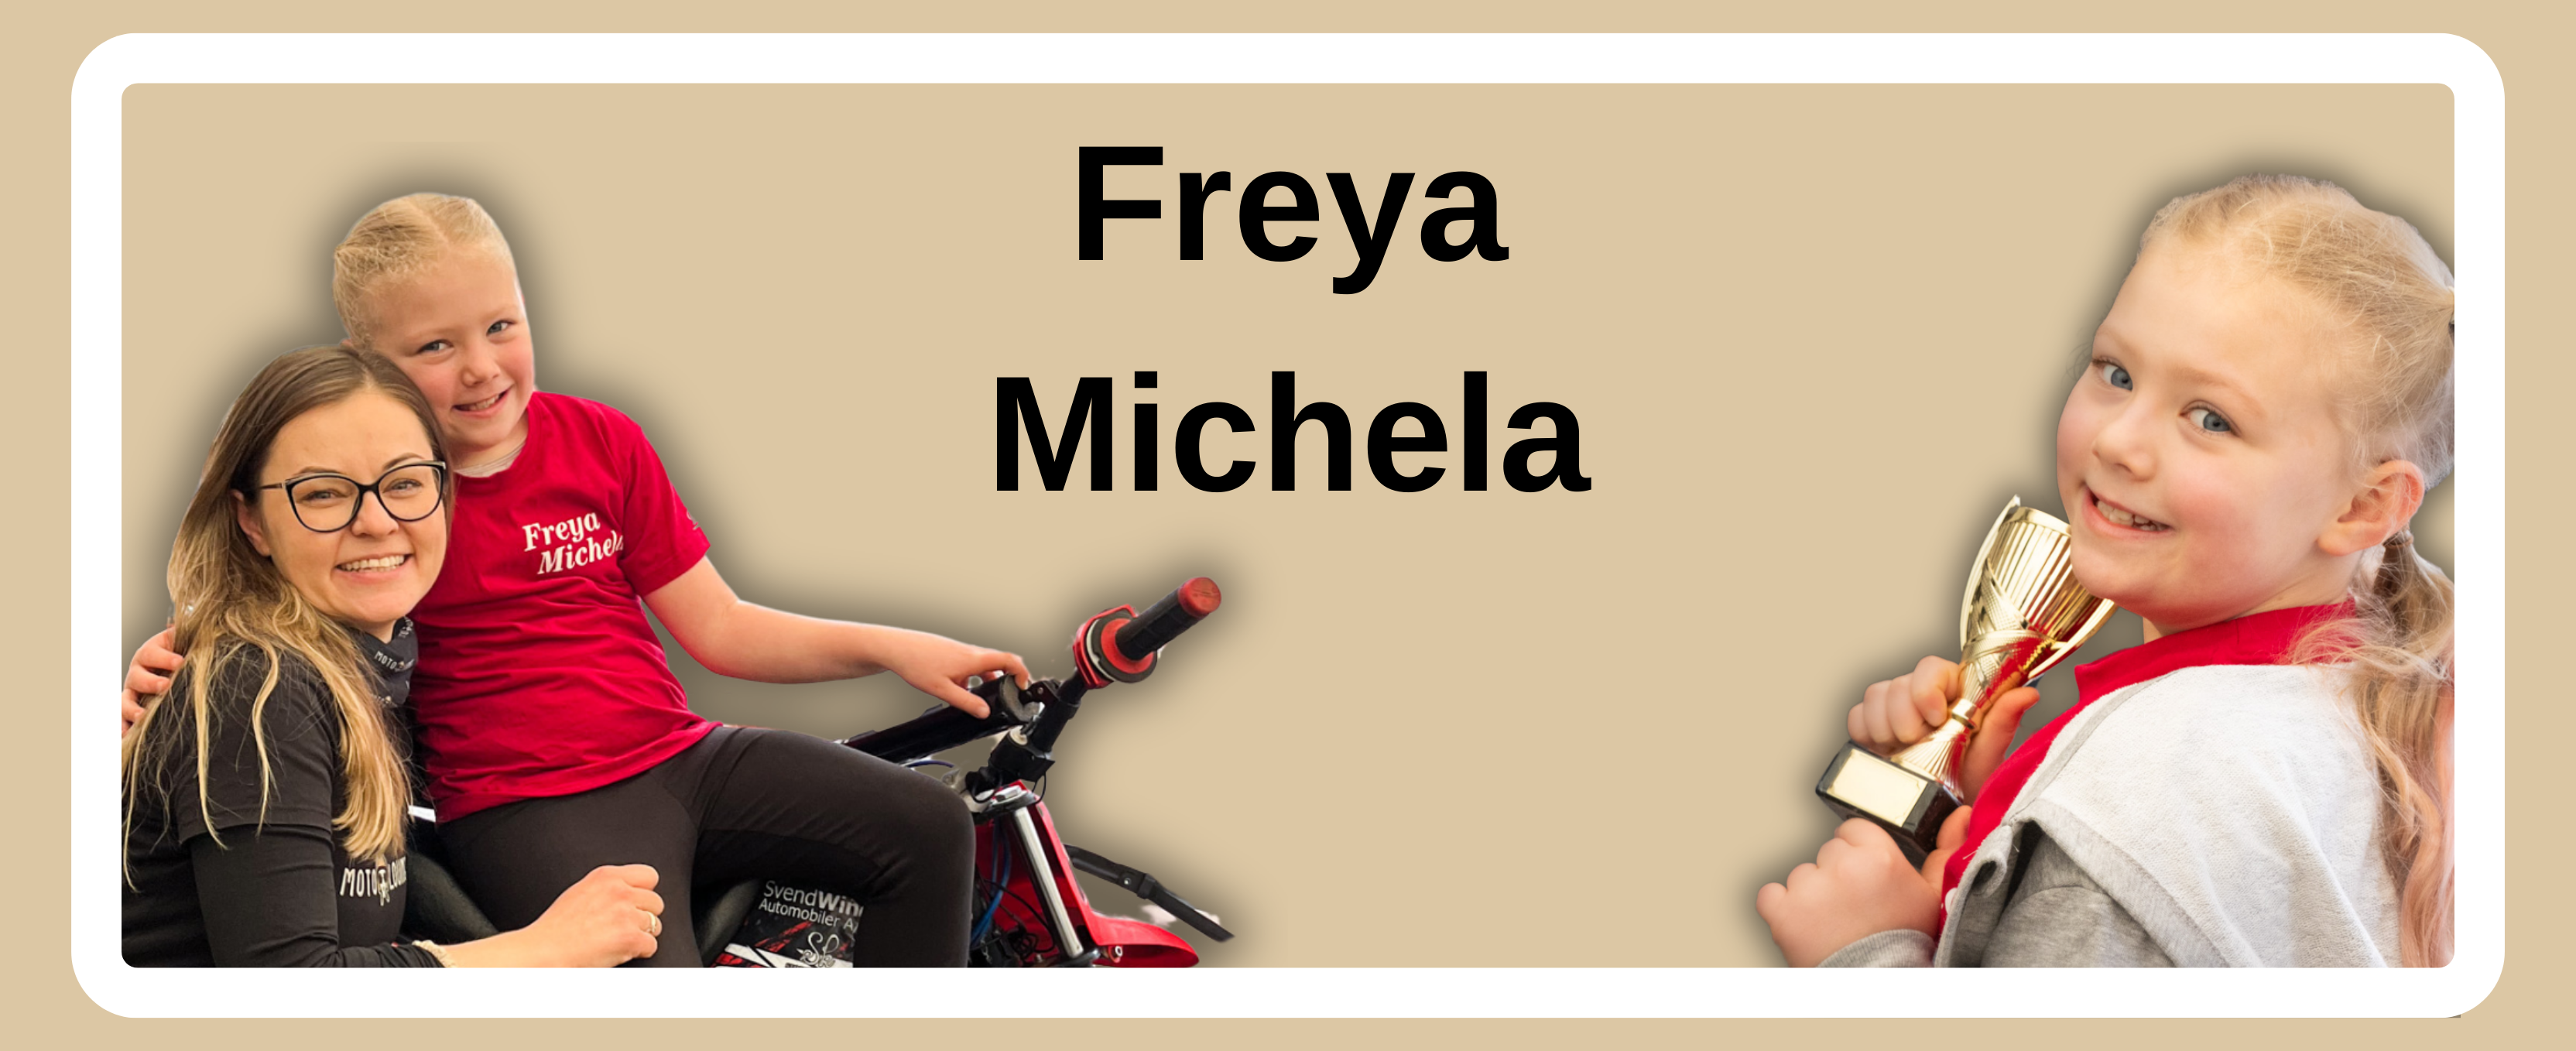 Meet Freya - the 8-year-old speedway racer